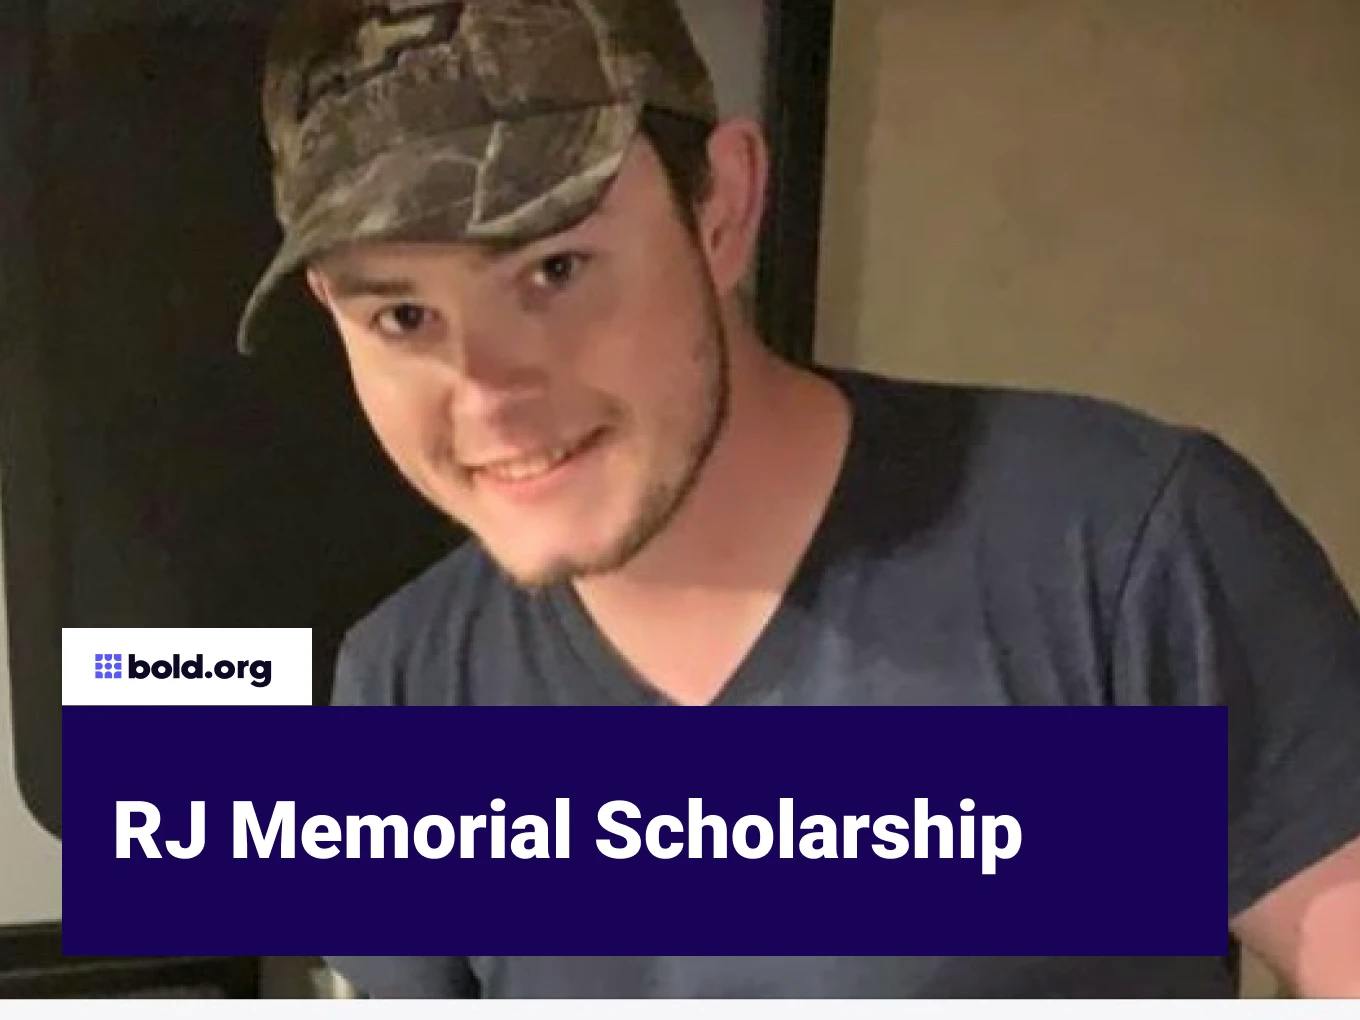 RJ Memorial Scholarship